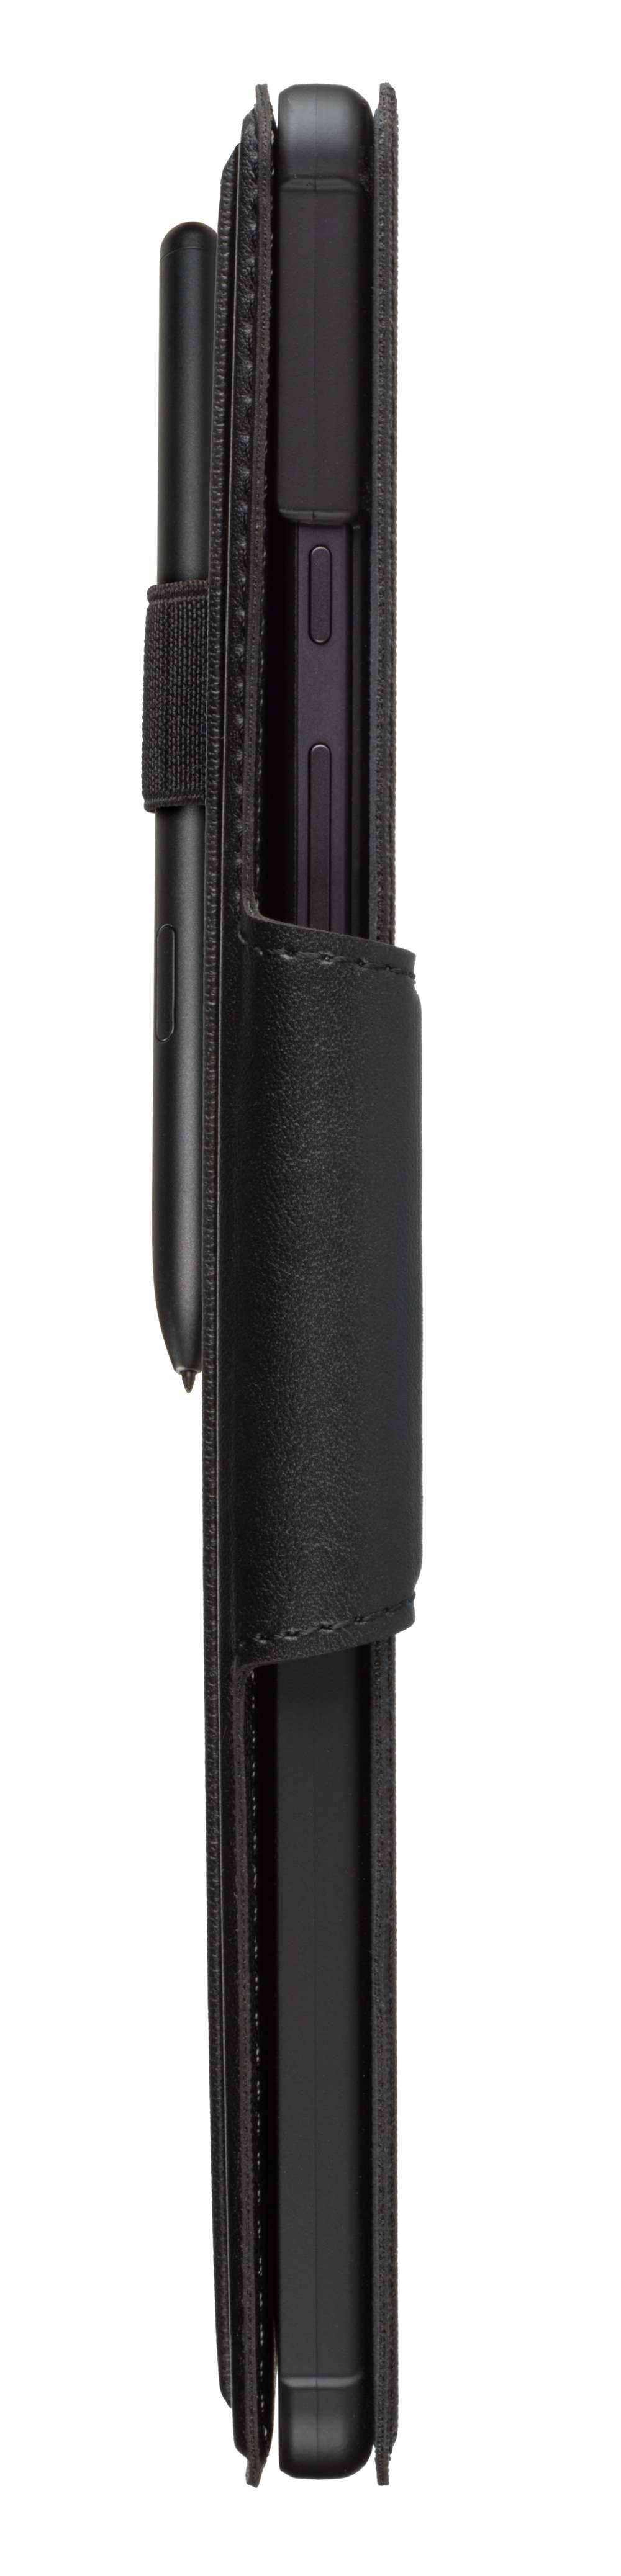 V11T81C1 - Business Tablet case - Samsung Galaxy Tab A8 10.5 inch (2021) - Black